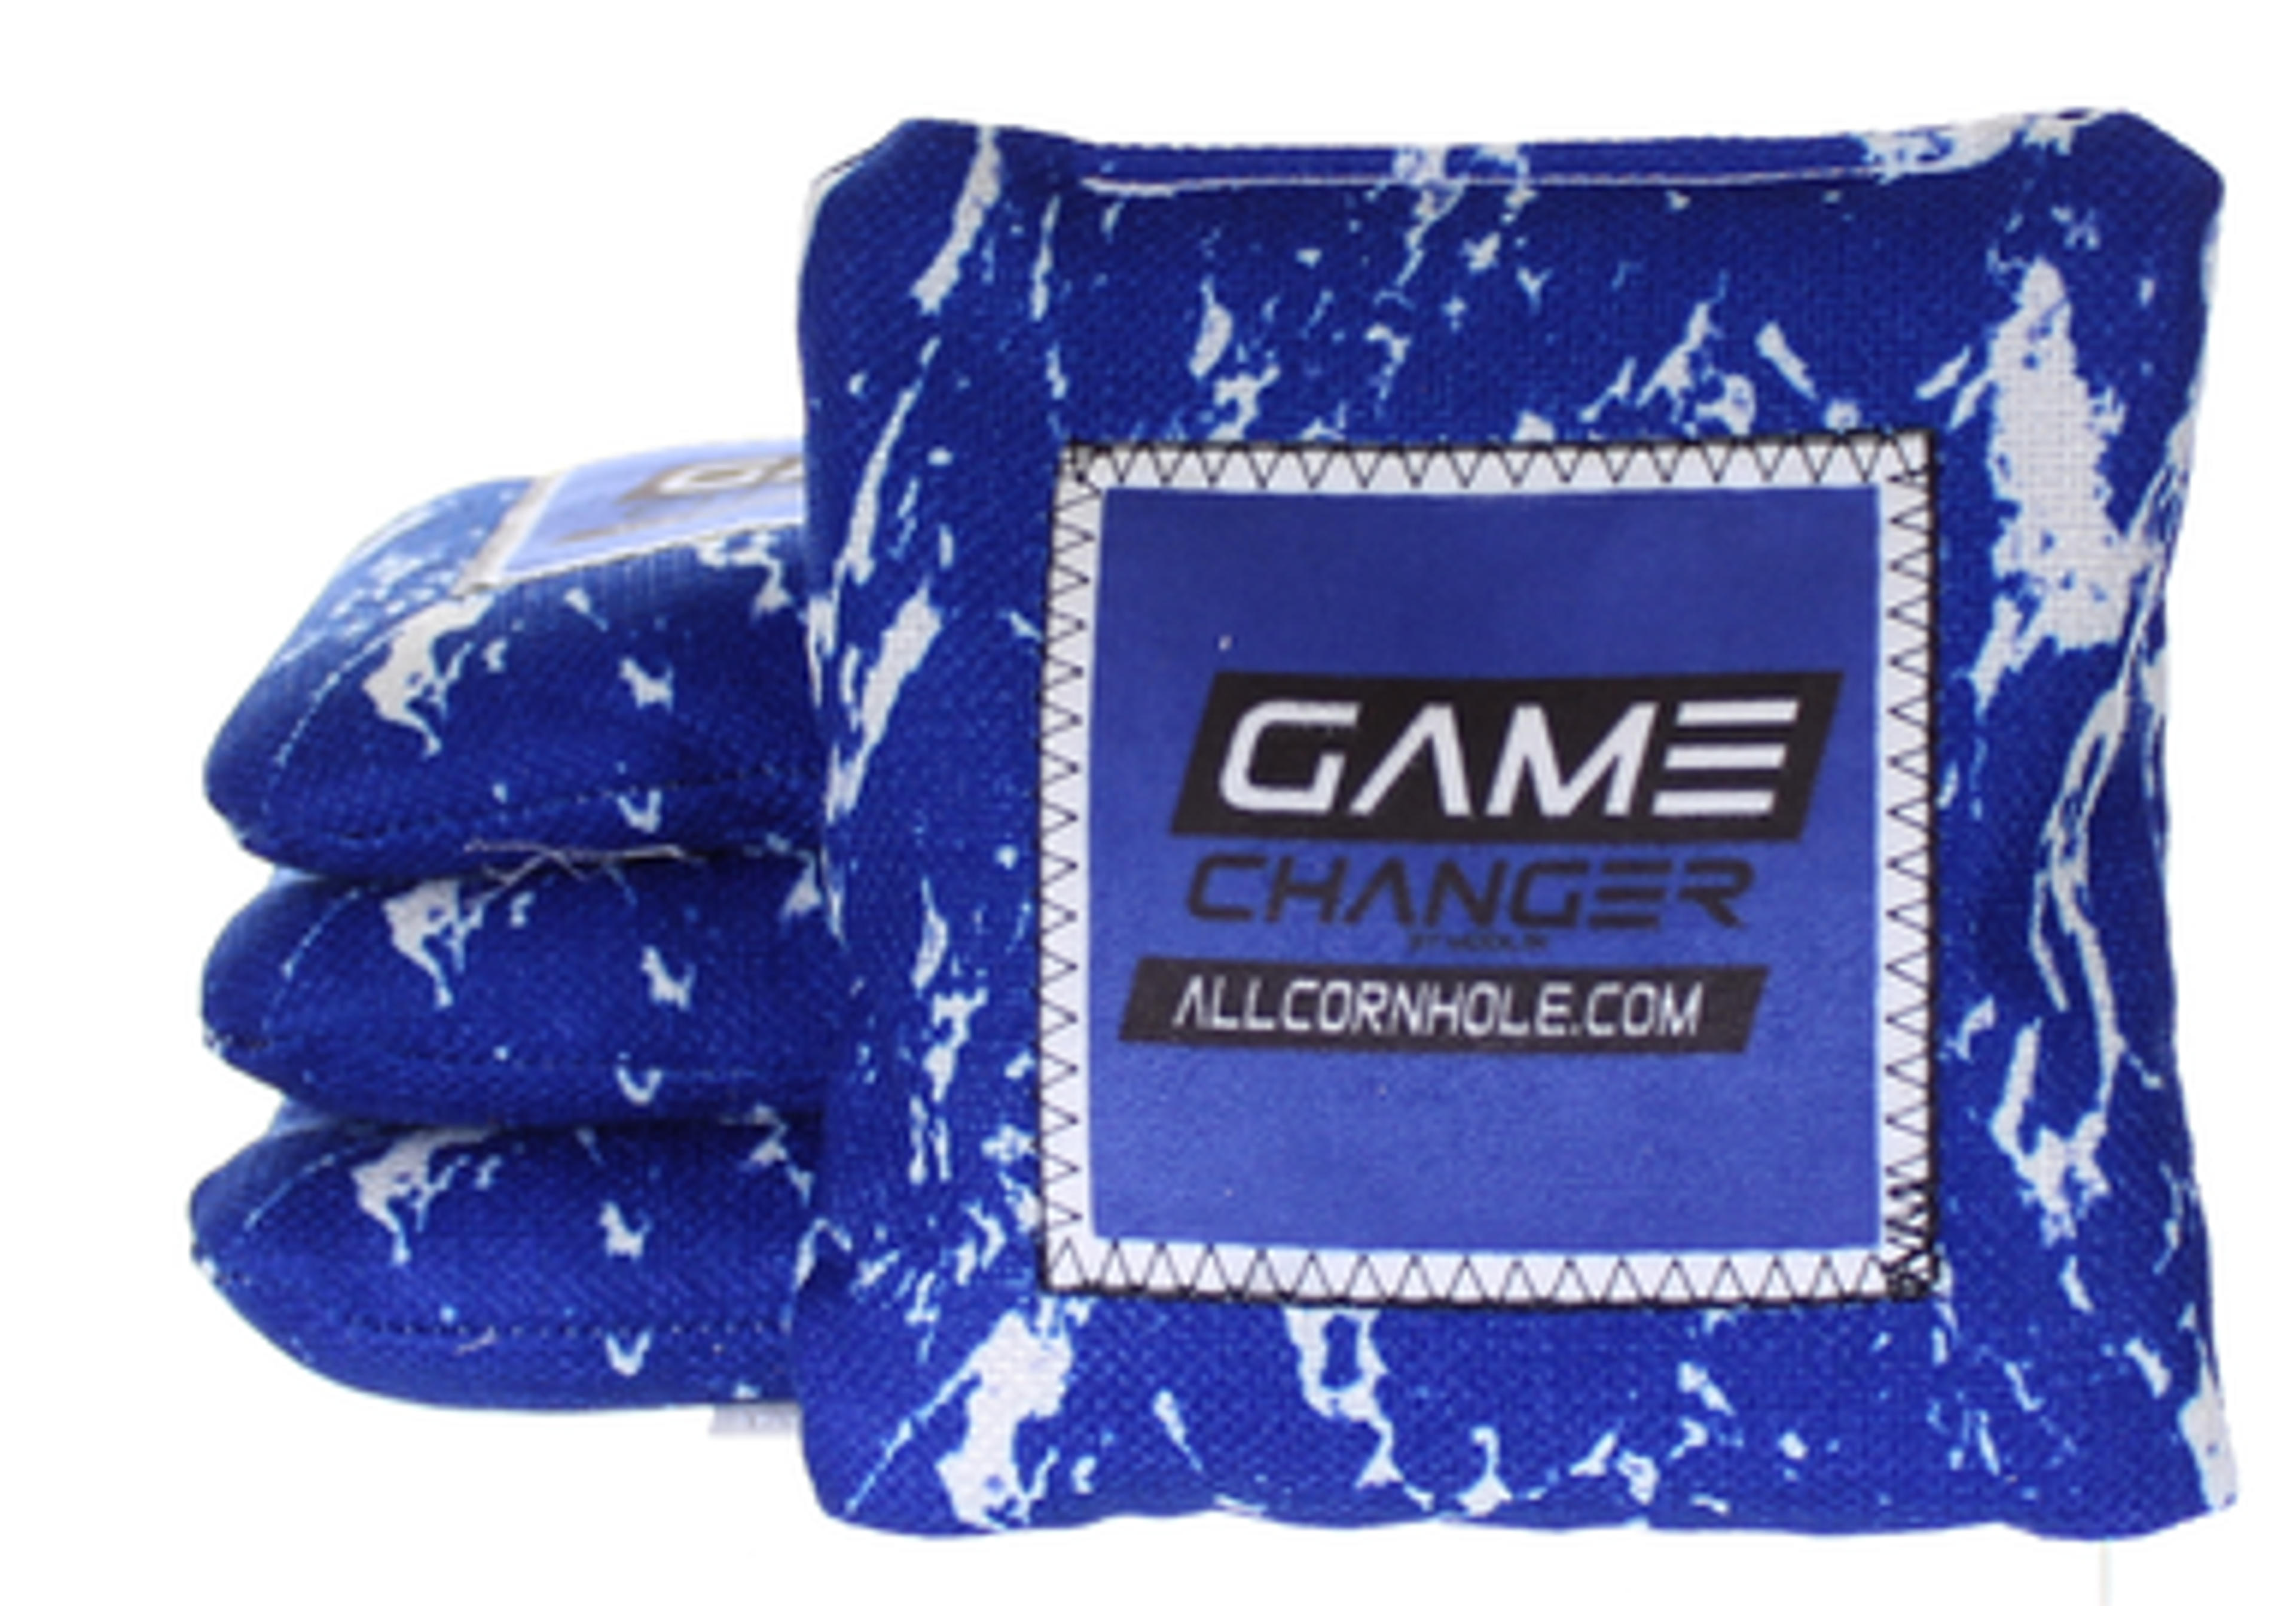 Gamechanger Cornhole Bags - Patent Pending